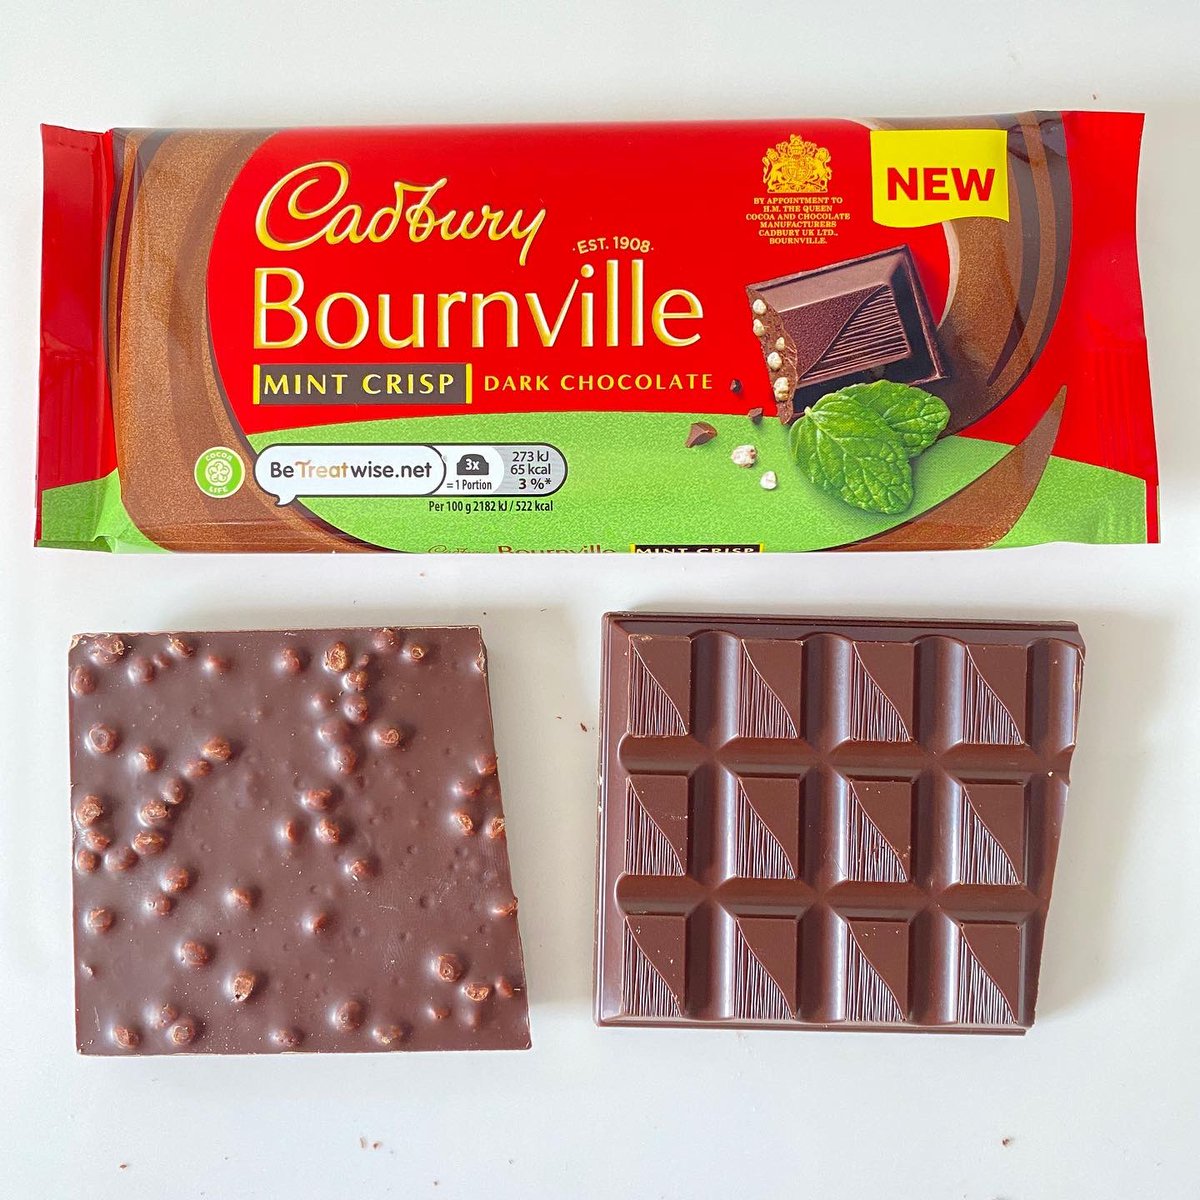 New Bournville Mint Crisp Review: instagram.com/p/CgzT2UGKdQG/ #chocolate #cadbury #cadburys #bournville #mint #snacks #poundland